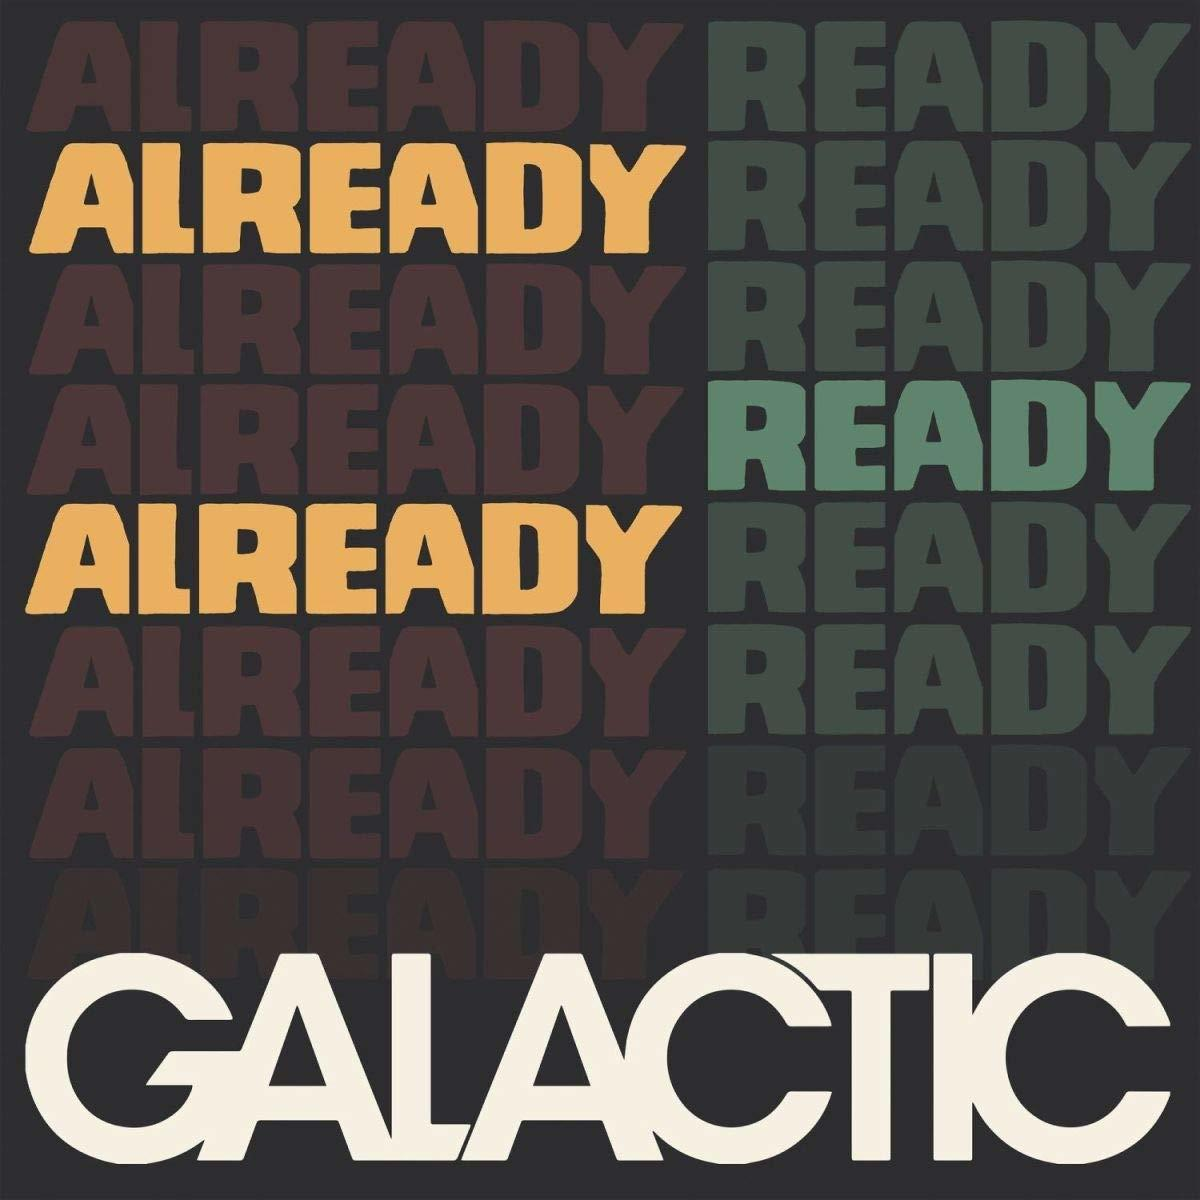 Ready Already - (LP) - Galactic Already (Vinyl)